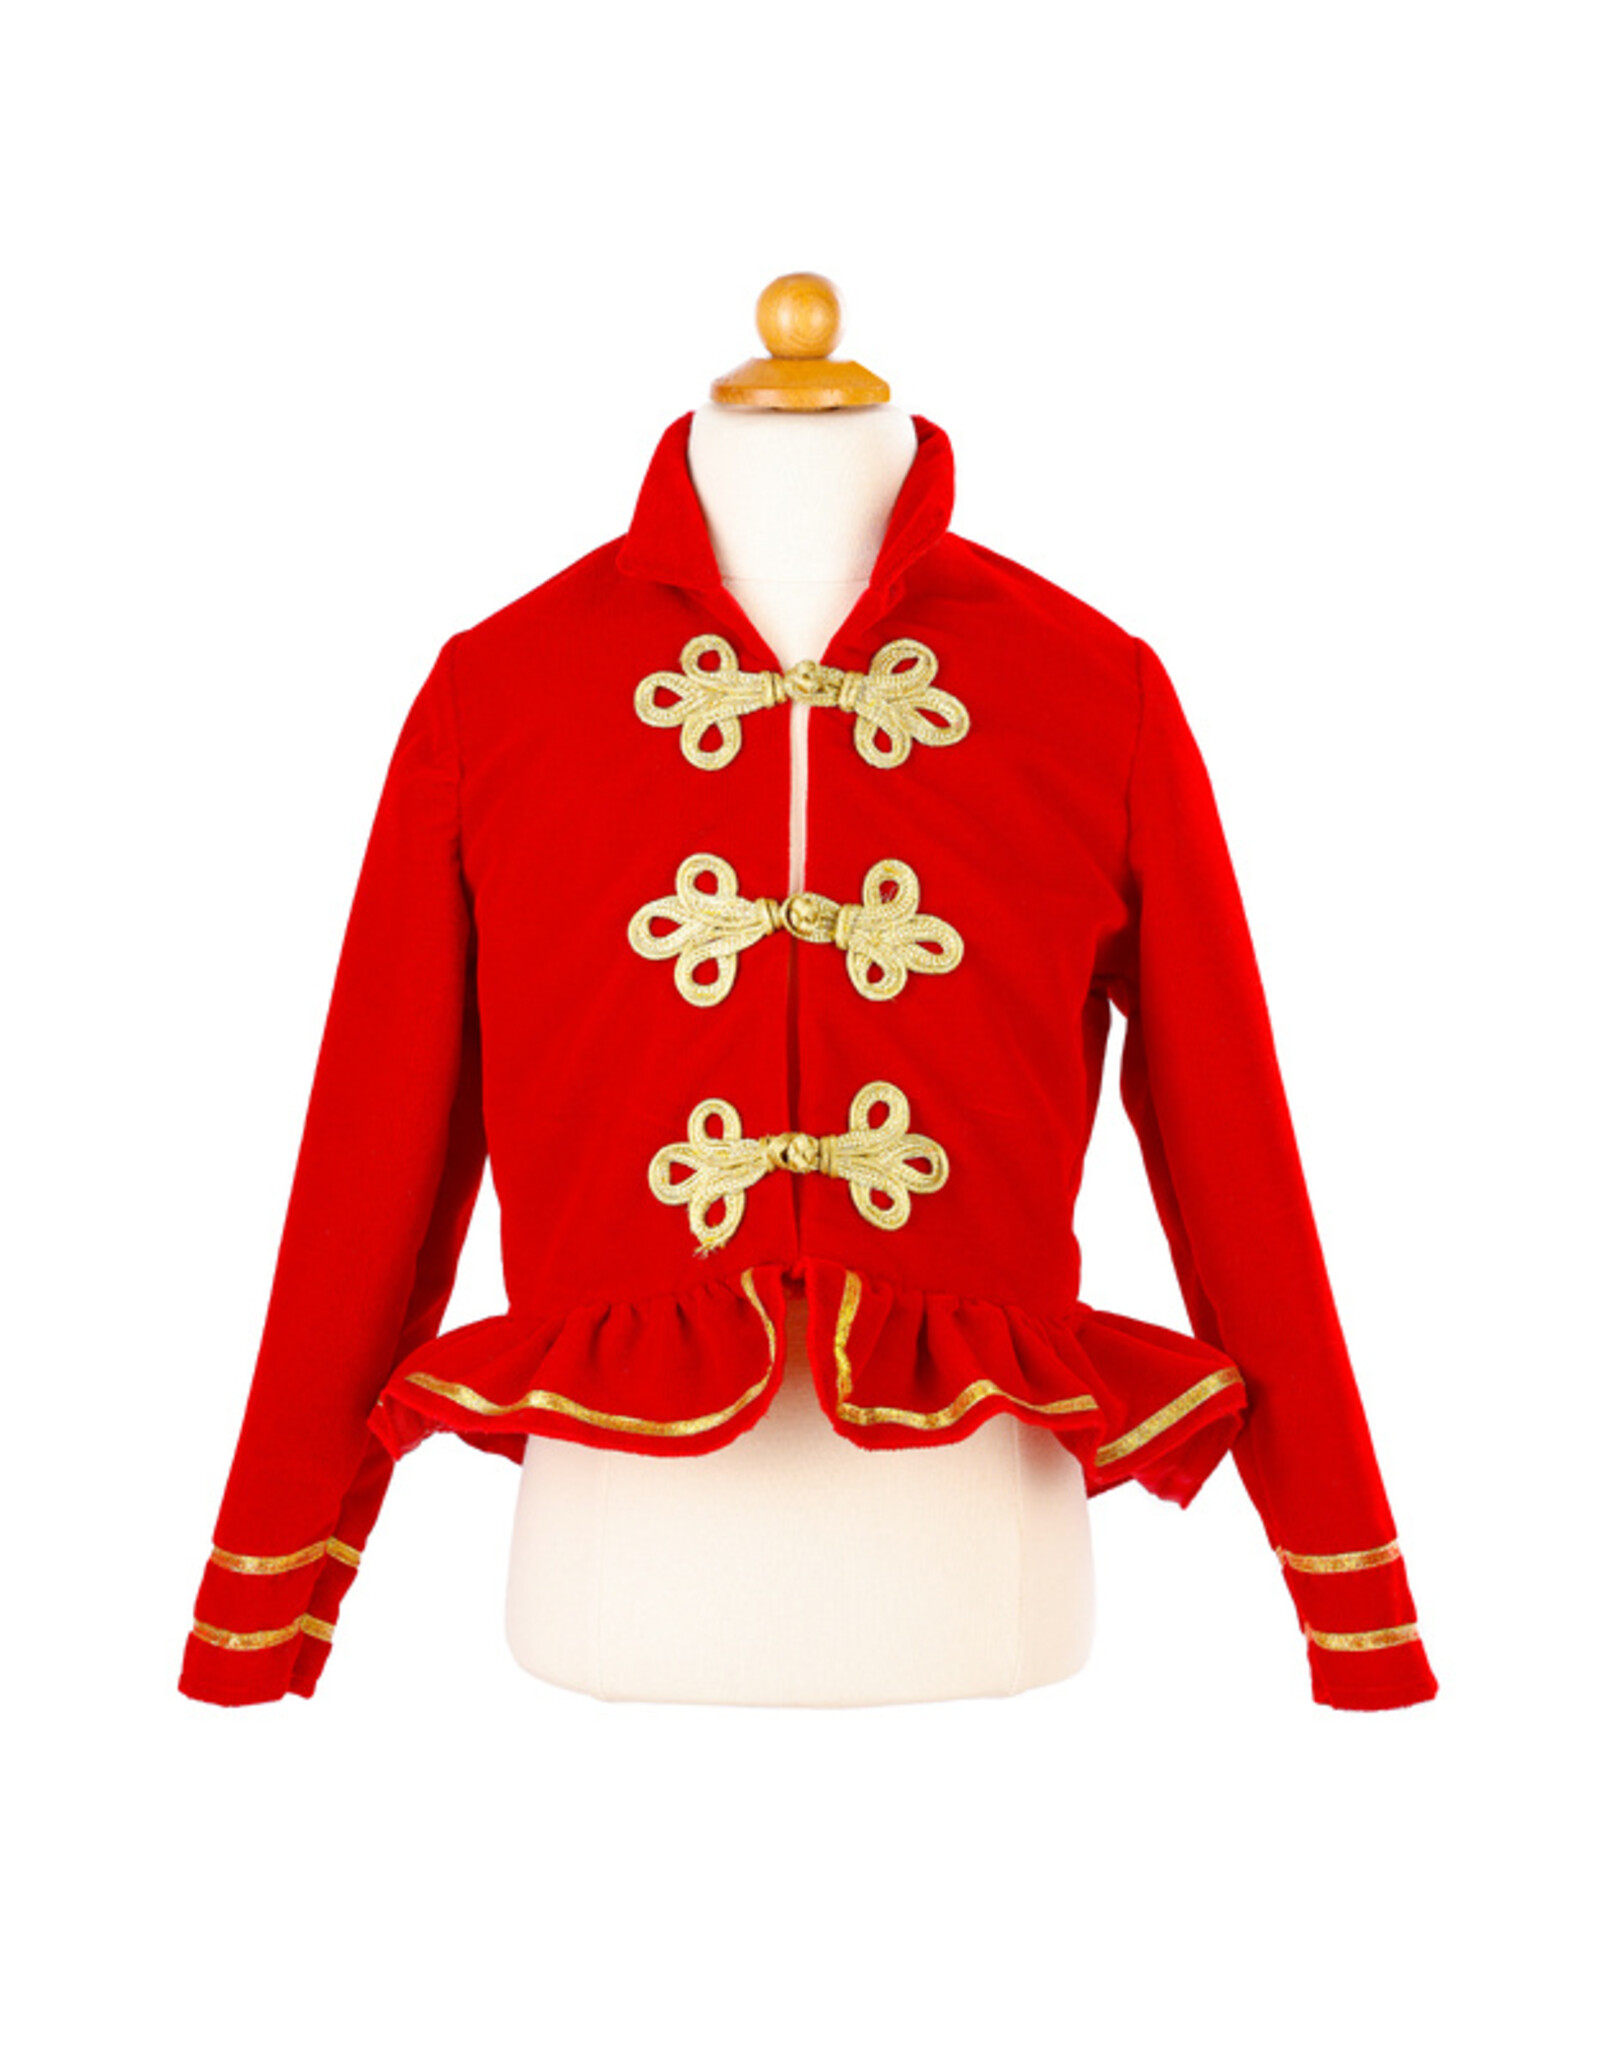 Great Pretenders Great Pretenders - Red Toy Soldier Jacket Size 5-6